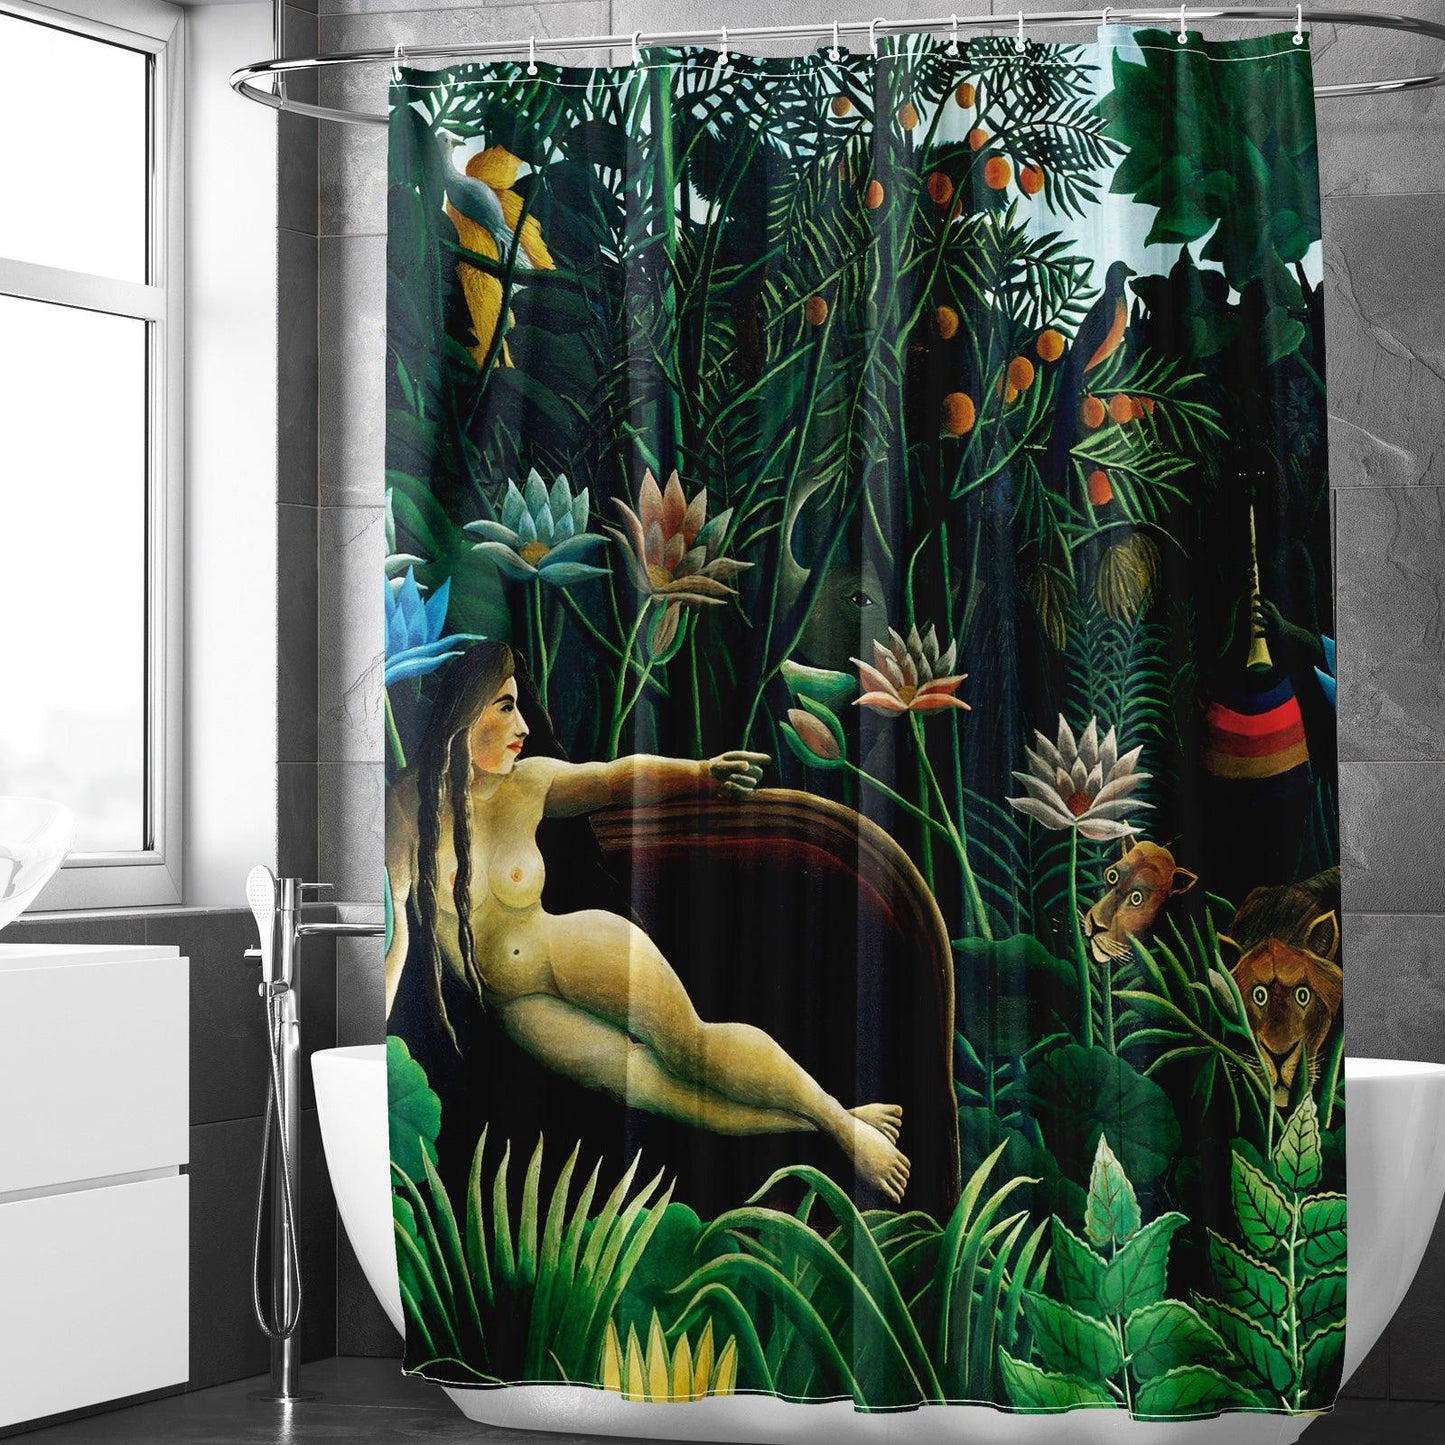 Abstract Art Shower Curtain Set (The Dream by Henri Rousseau) - Berkin Arts